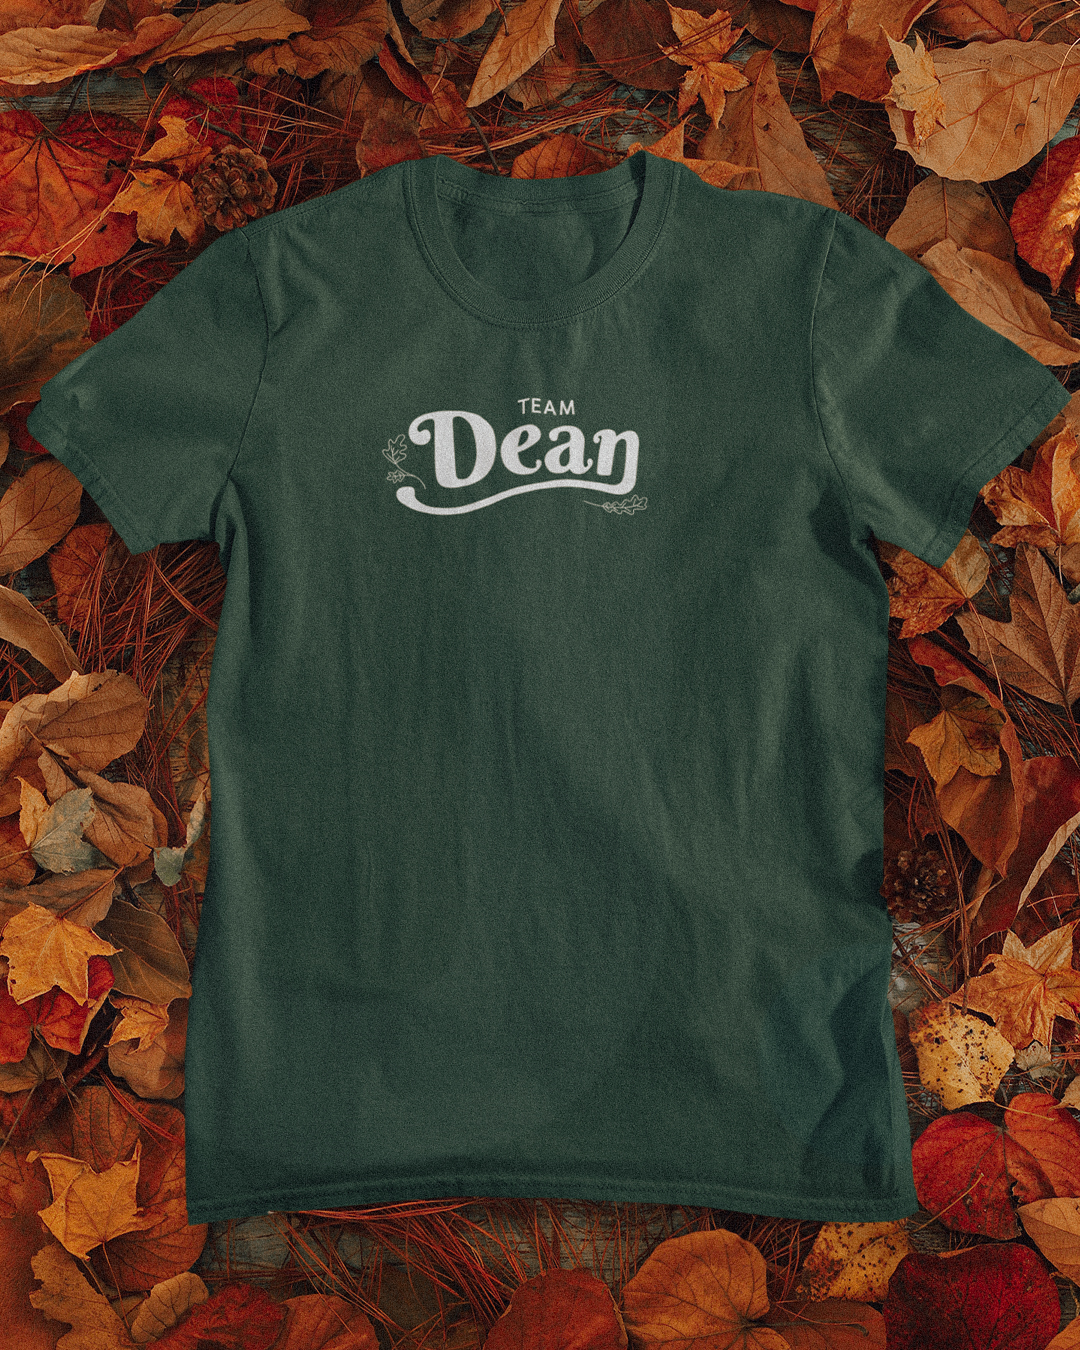 Team Dean Forester T-Shirt - Gilmore Girls Inspired T-Shirt - Rory Gilmore's Boyfriends - Team Dean Forester Gilmore Girls Inspired T-Shirt